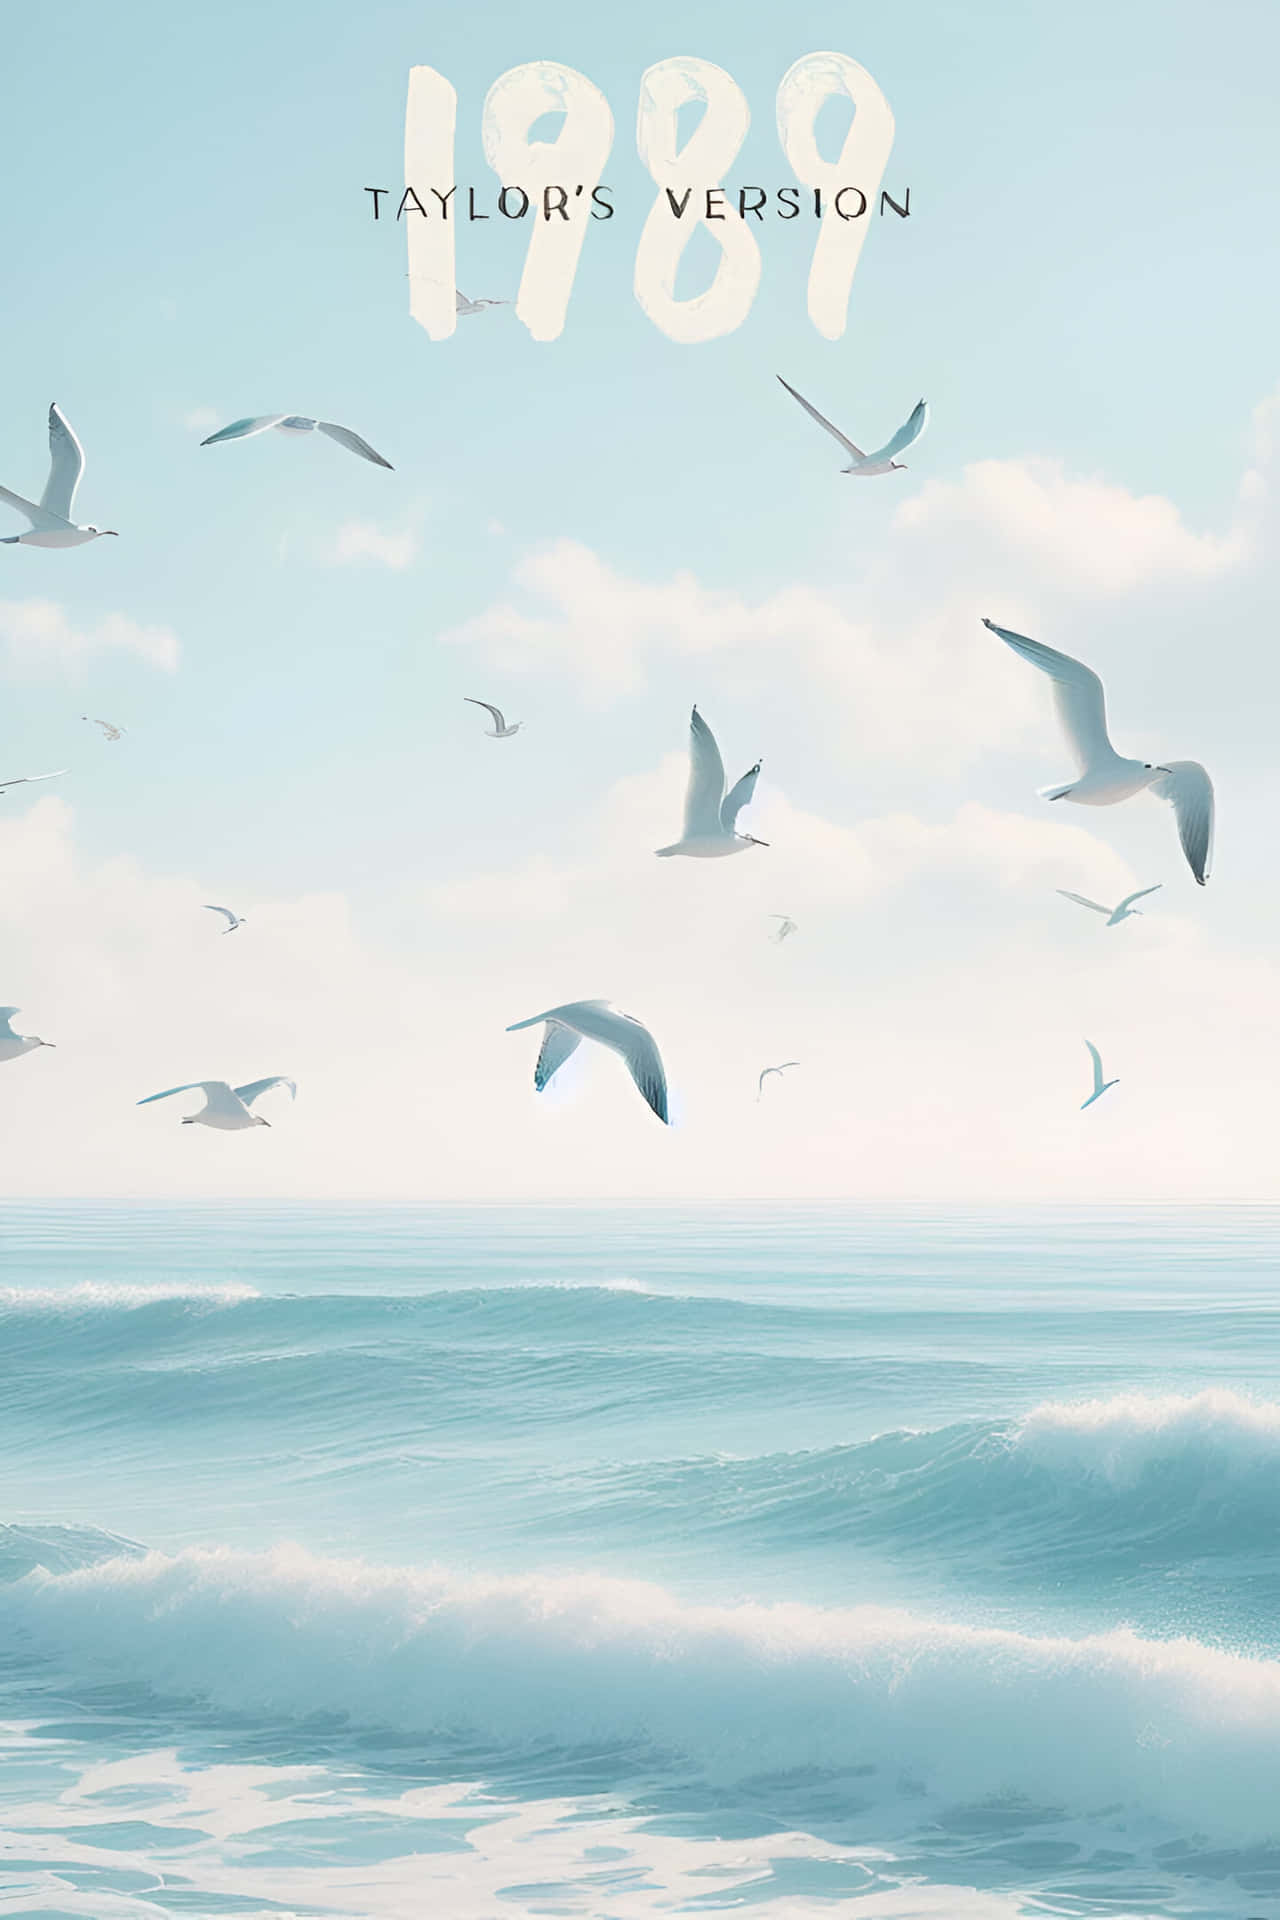 Seagullsand Ocean Waves Album Cover Wallpaper